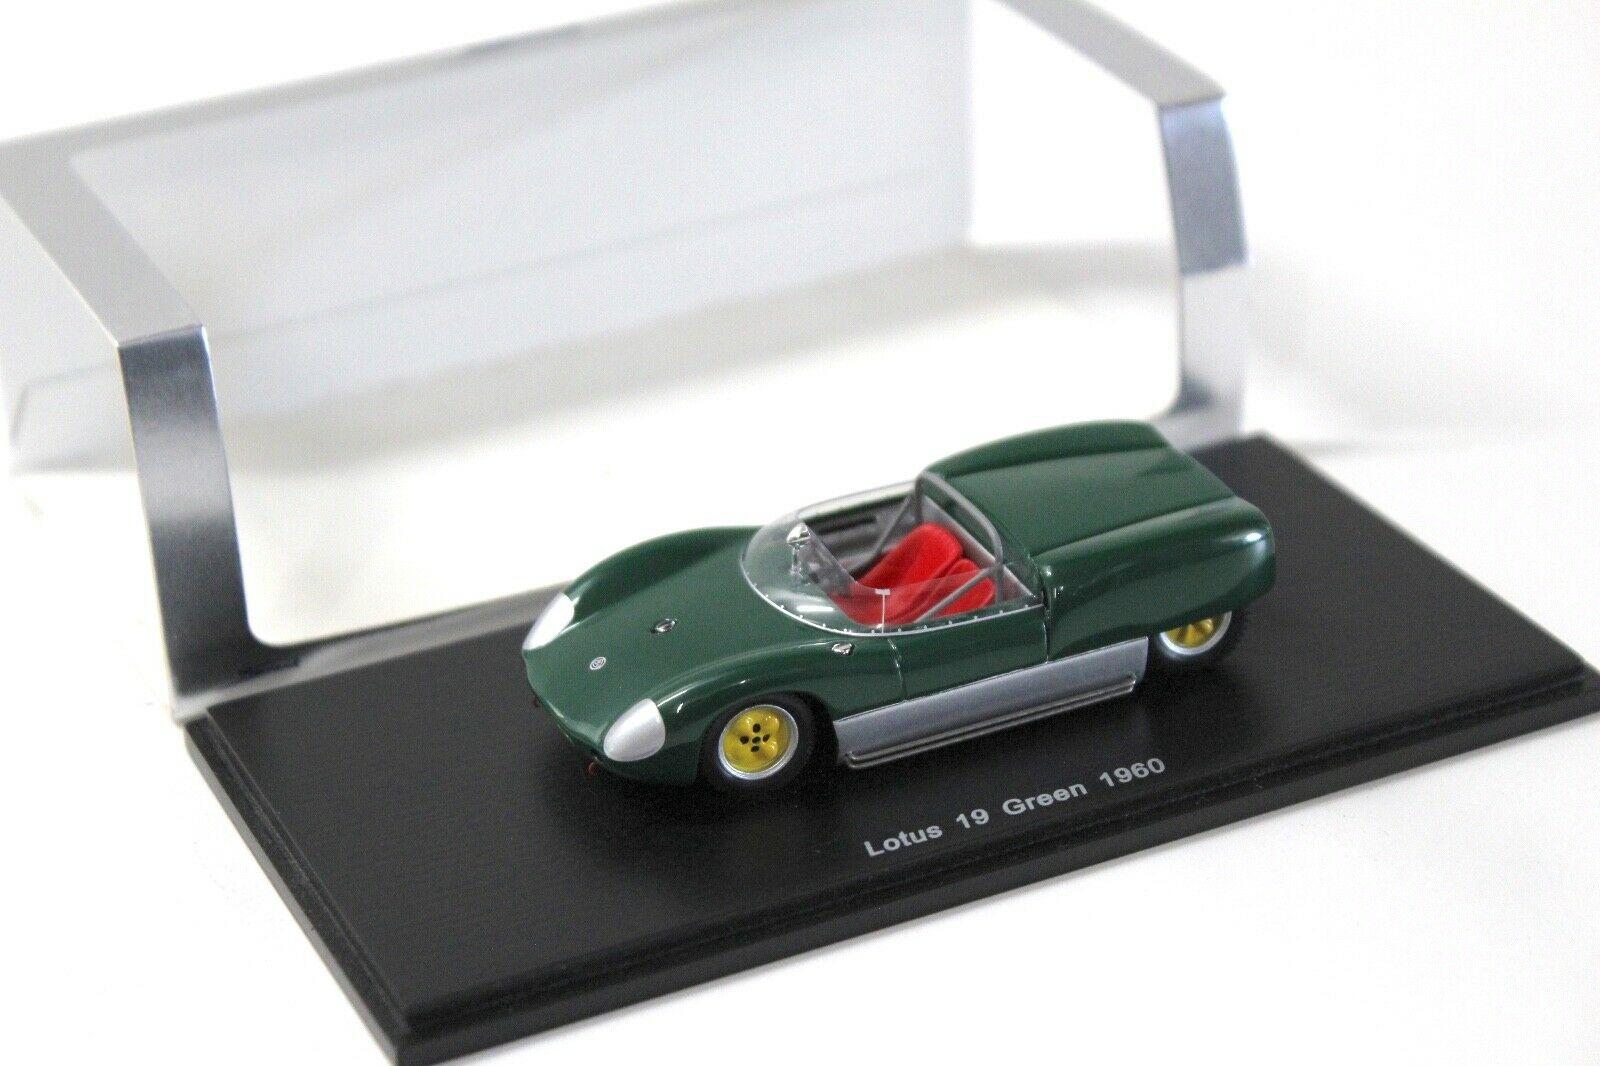 1:43 Spark Lotus 19 green 1960